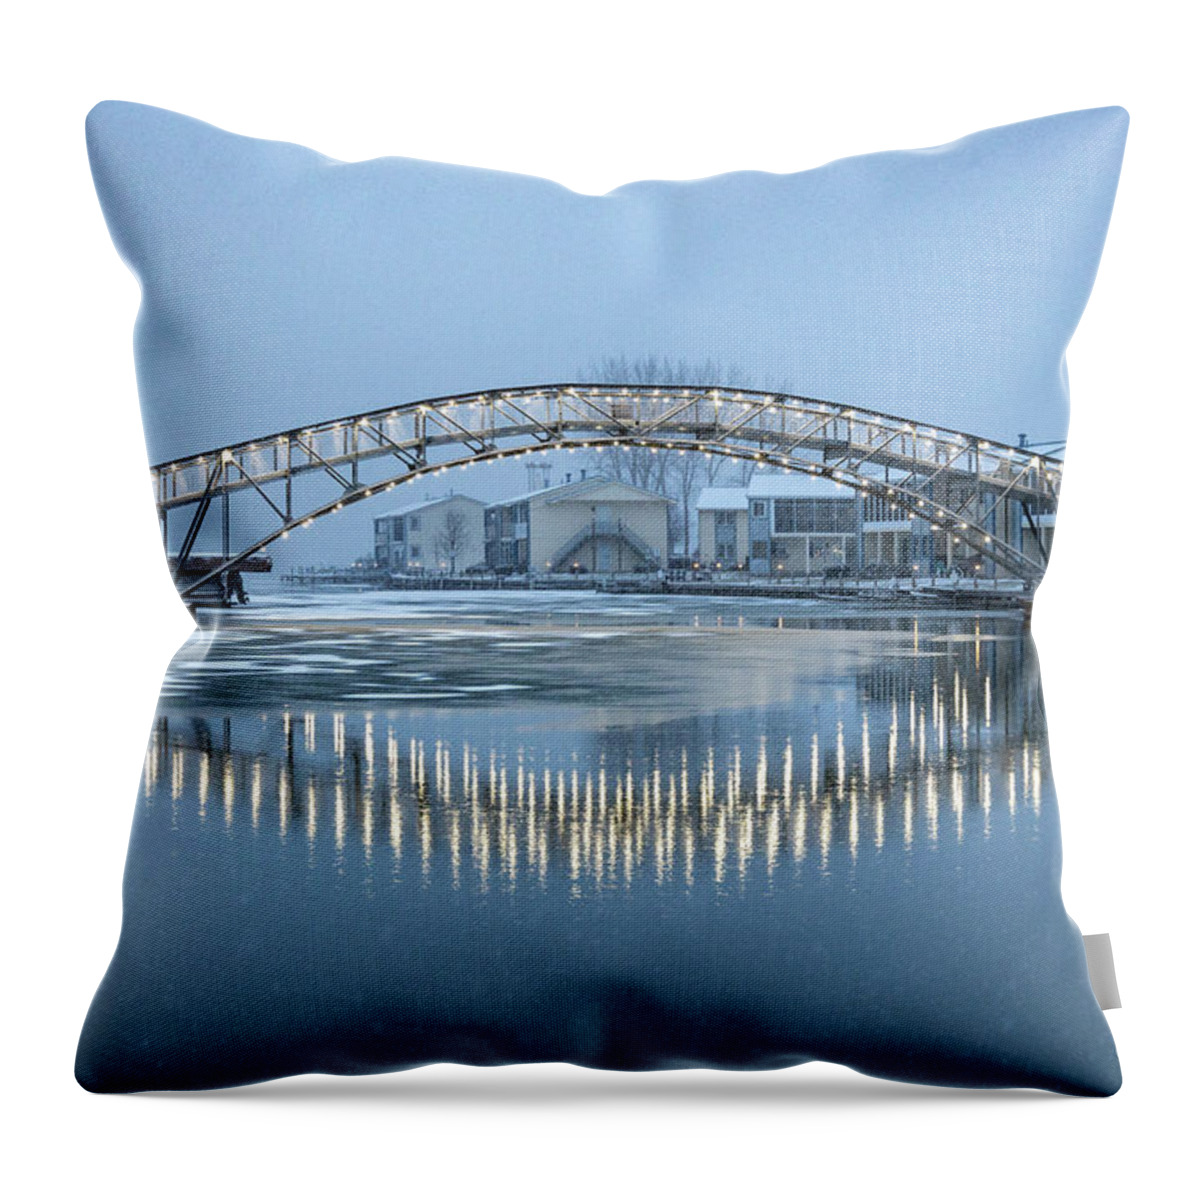  Throw Pillow featuring the photograph Sandy Beach Bridge #4 by Brian Jones